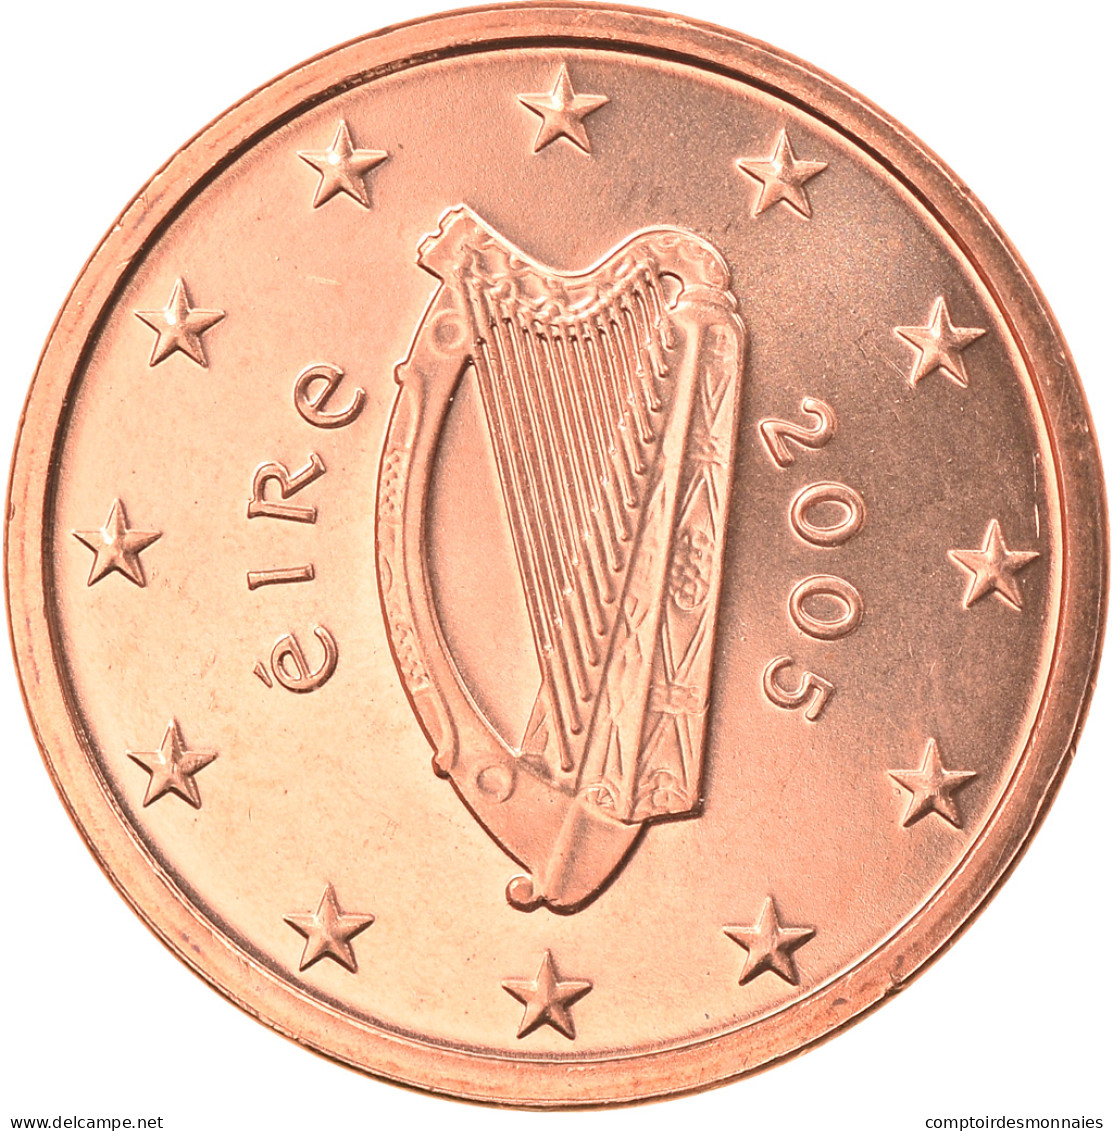 IRELAND REPUBLIC, Euro Cent, 2005, Sandyford, FDC, Copper Plated Steel, KM:32 - Ireland